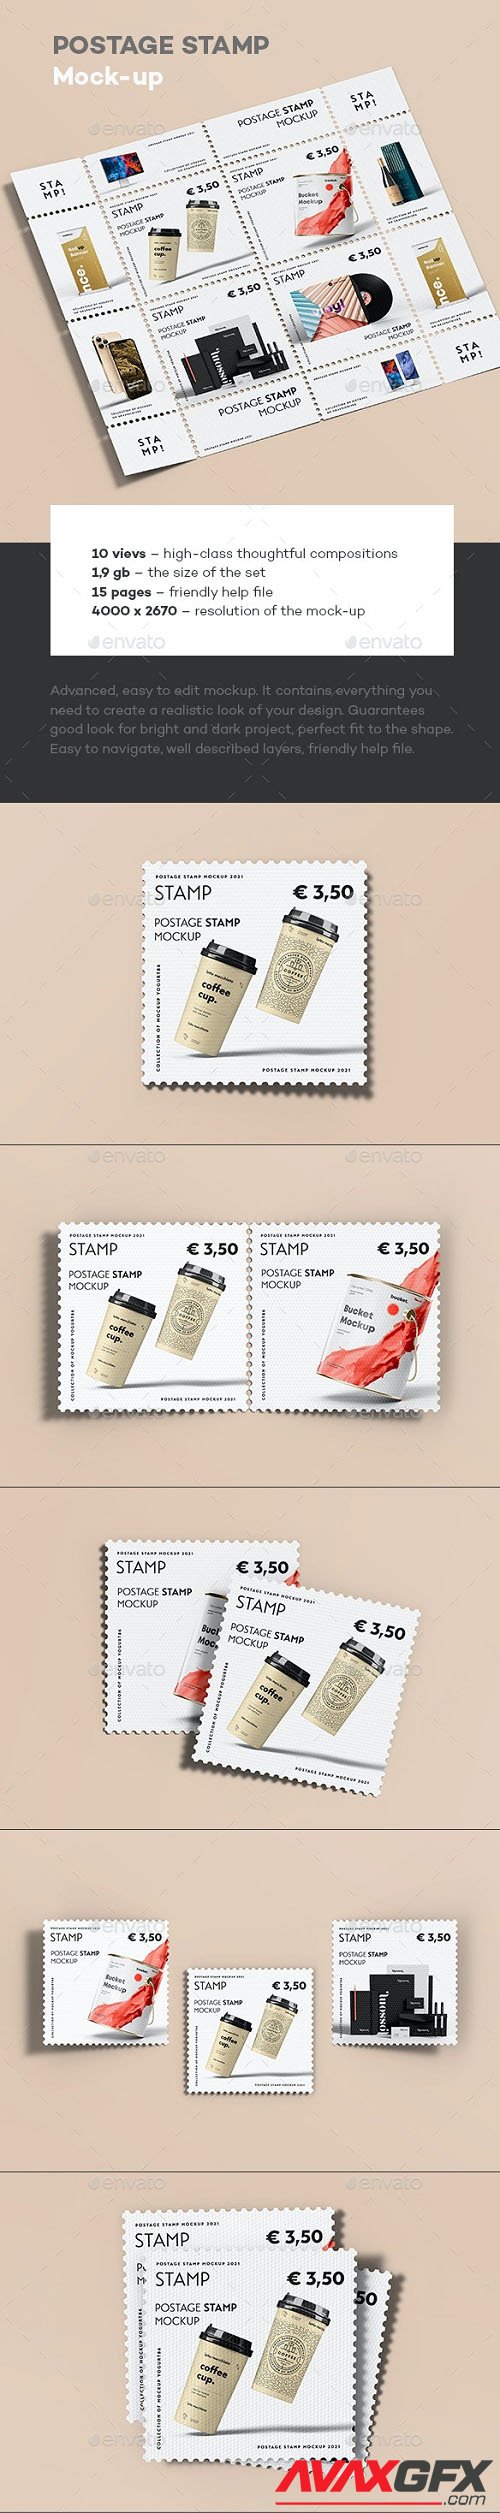 Postage Stamp Mockup - 32396102